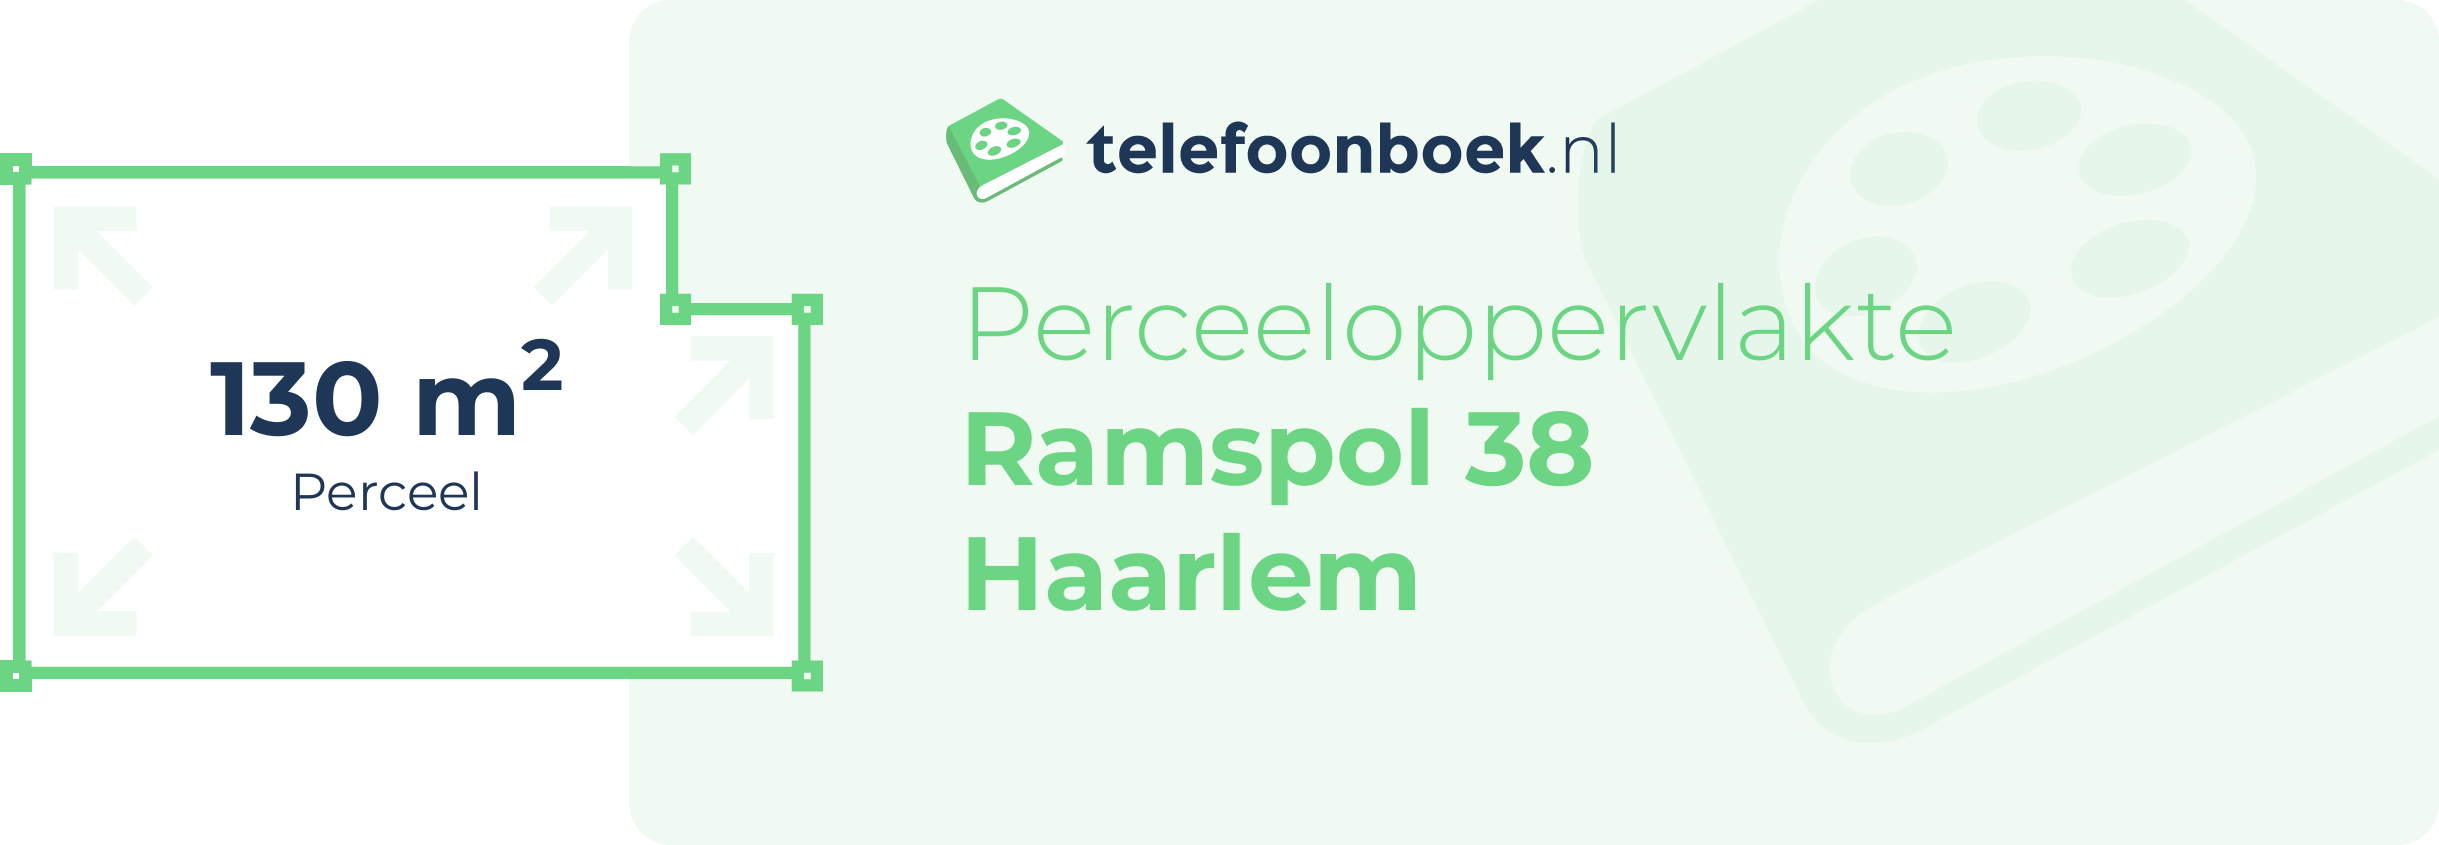 Perceeloppervlakte Ramspol 38 Haarlem